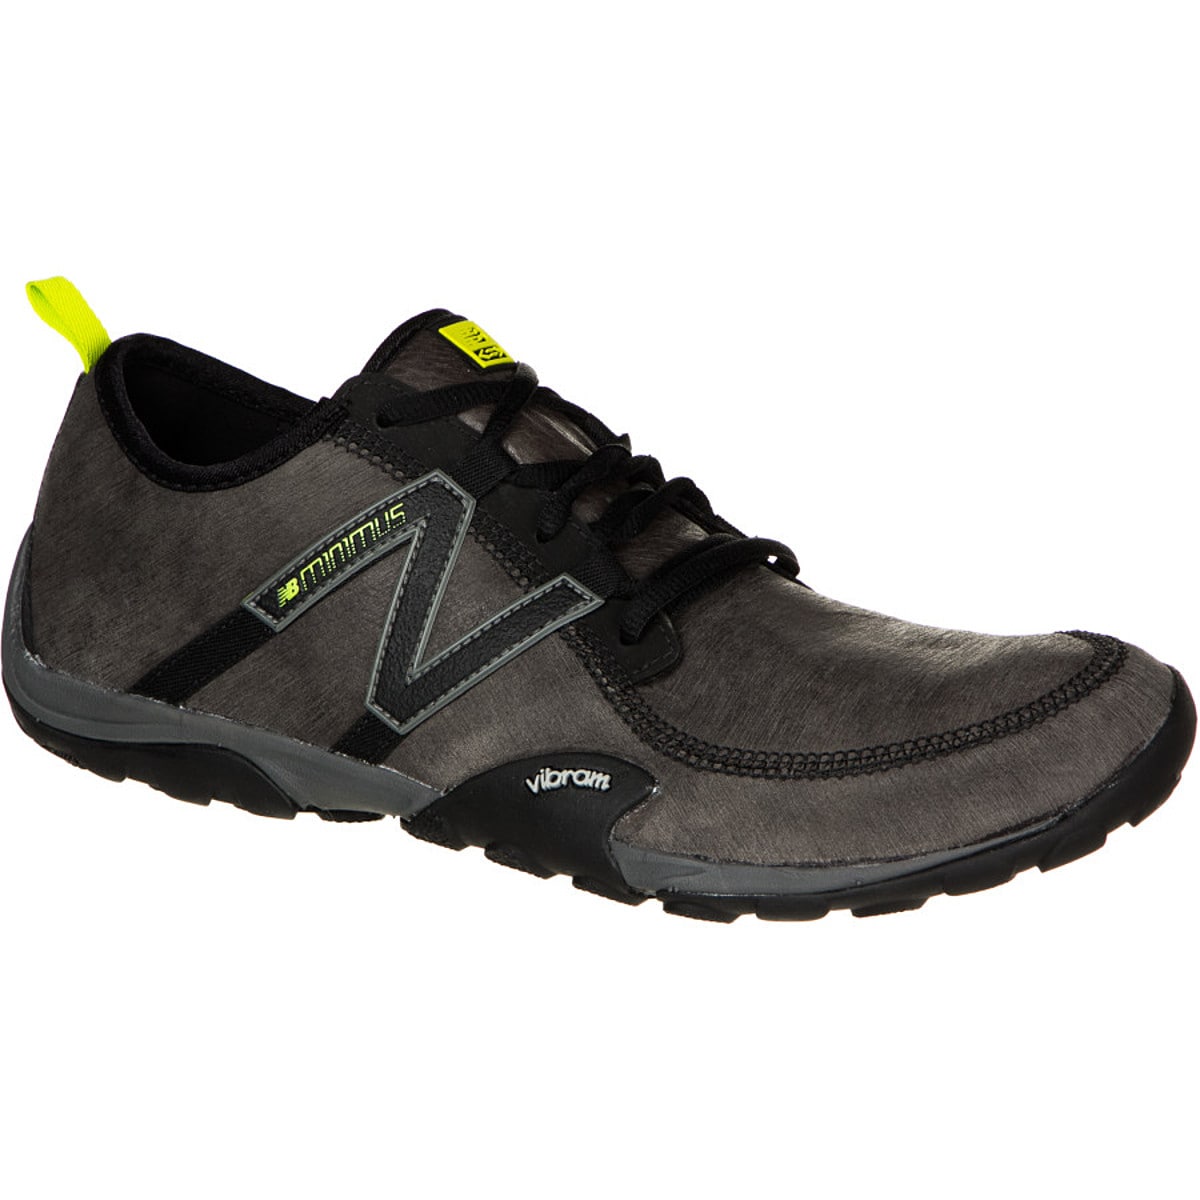 New MT10 Minimus Leather Trail Running Shoe - Men's - Footwear